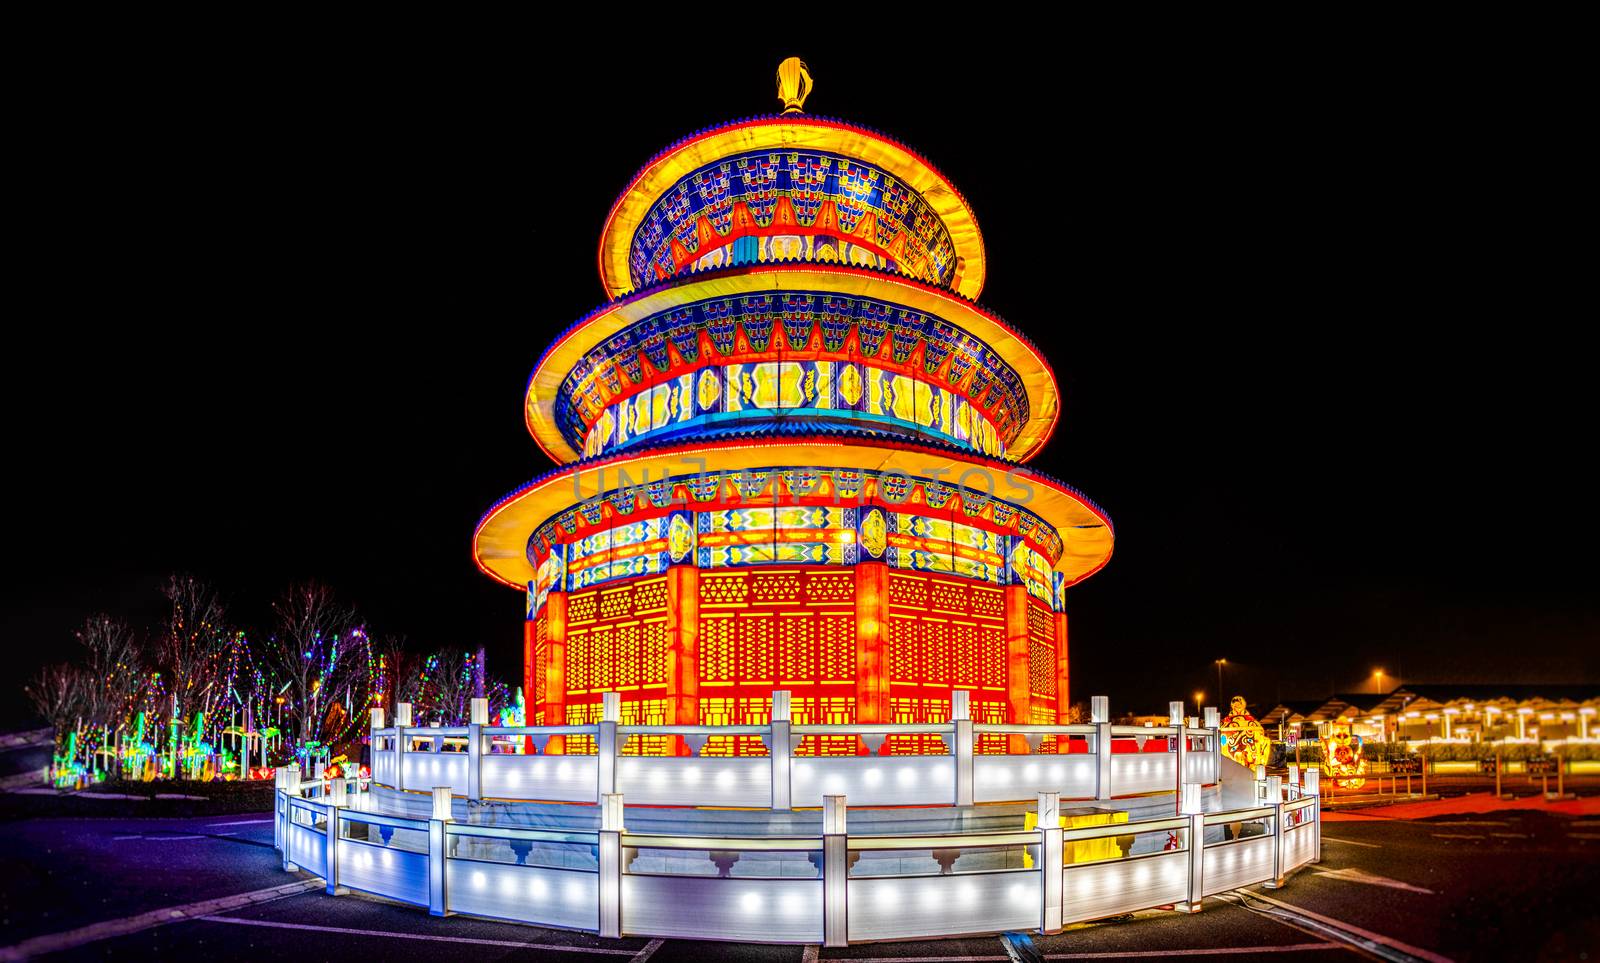 pagoda lantern festival by night with beatiful chinese light decorations by LucaLorenzelli